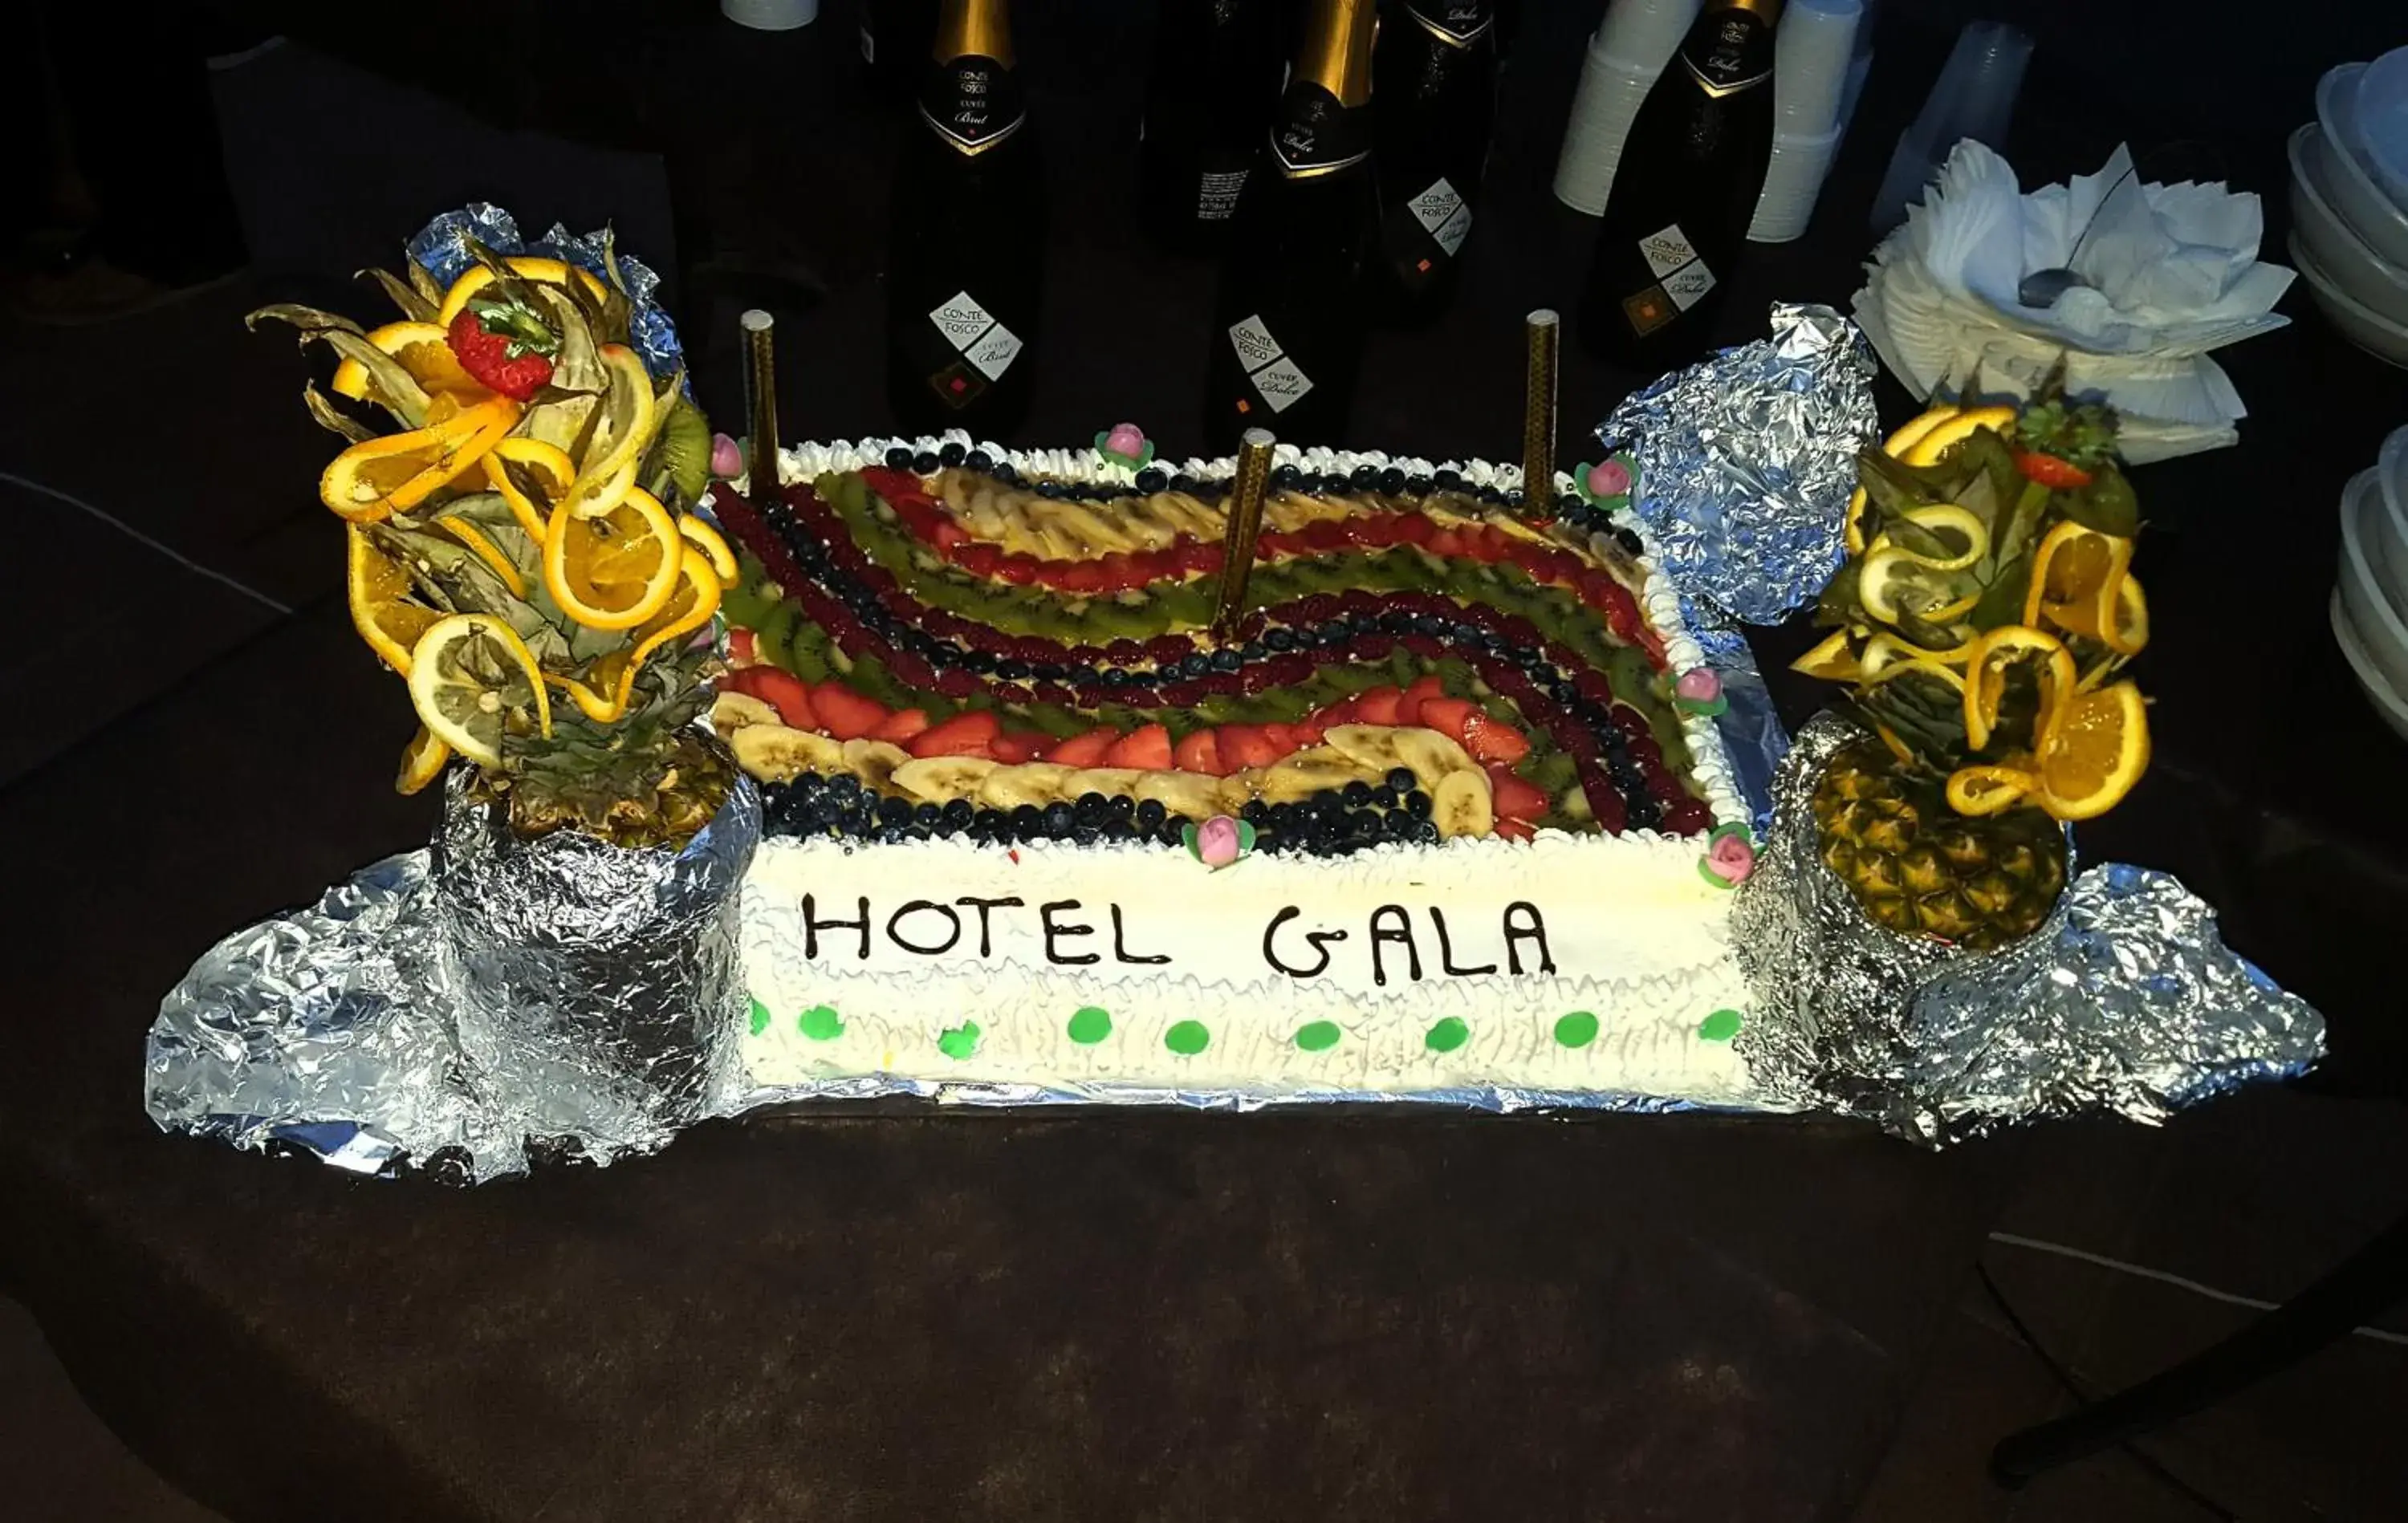 Dinner in Hotel Gala